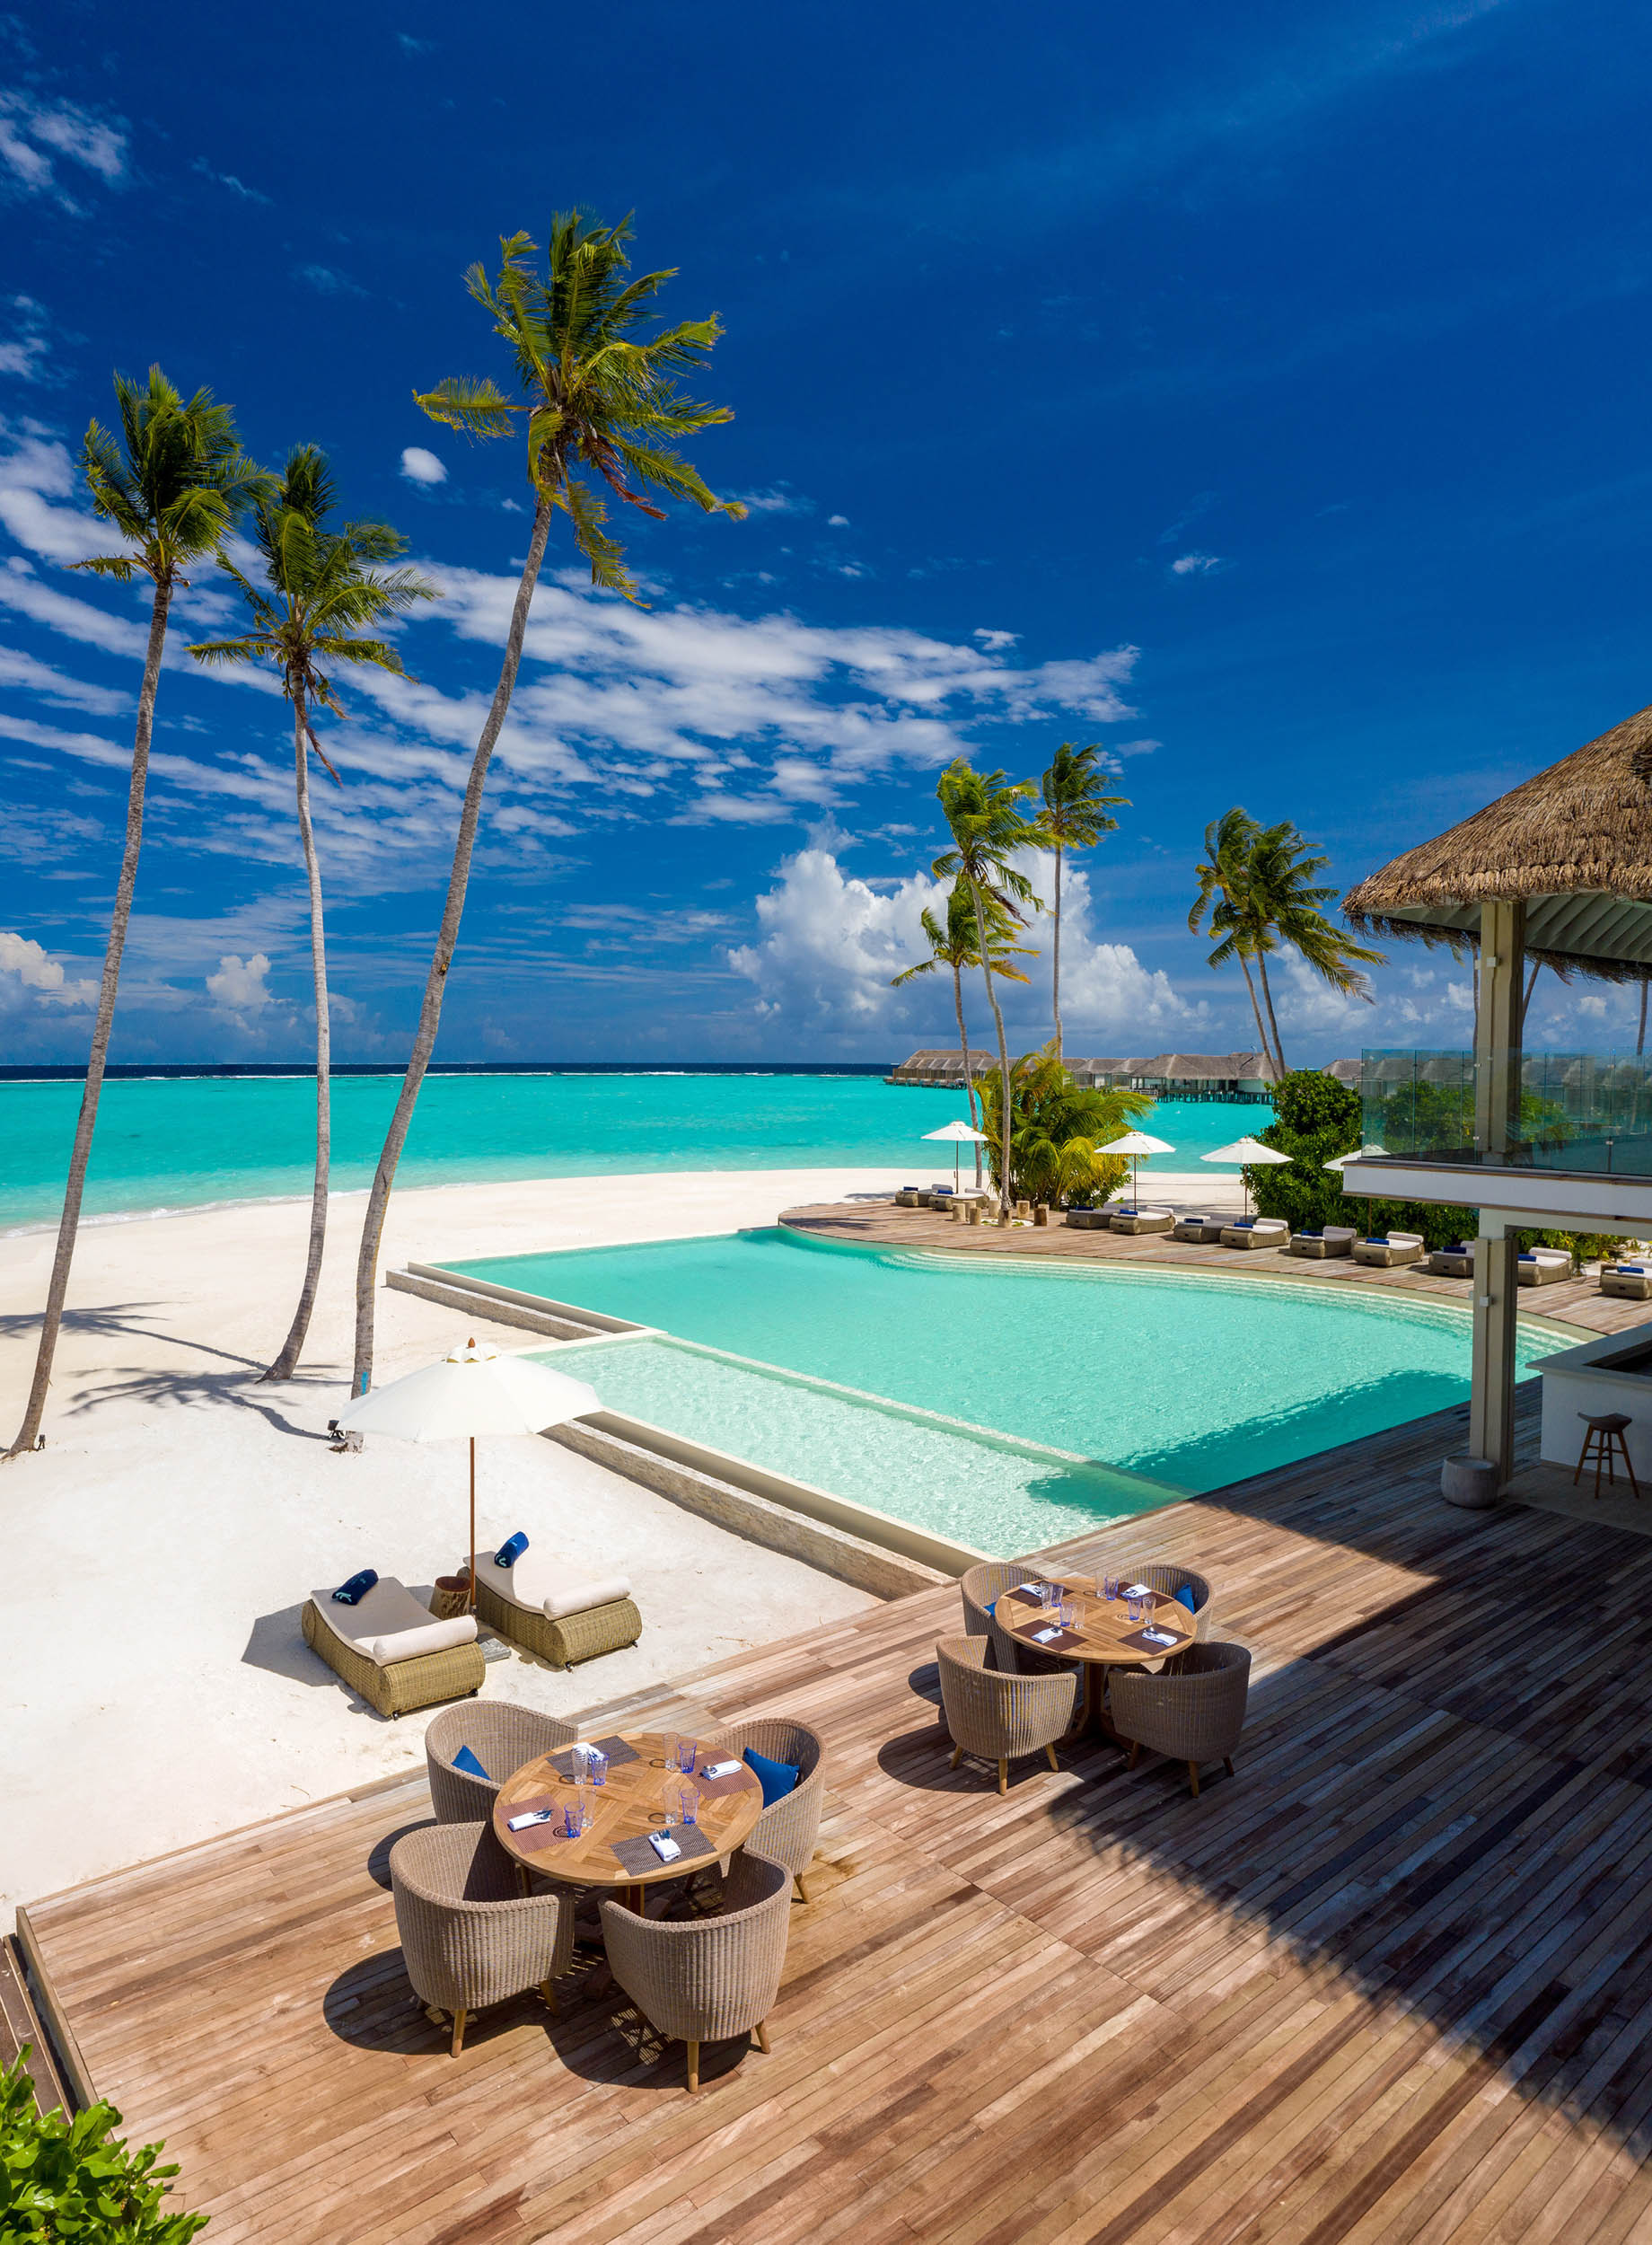 Baglioni Resort Maldives - Maagau Island, Rinbudhoo, Maldives - Pool Bar Deck Ocean View